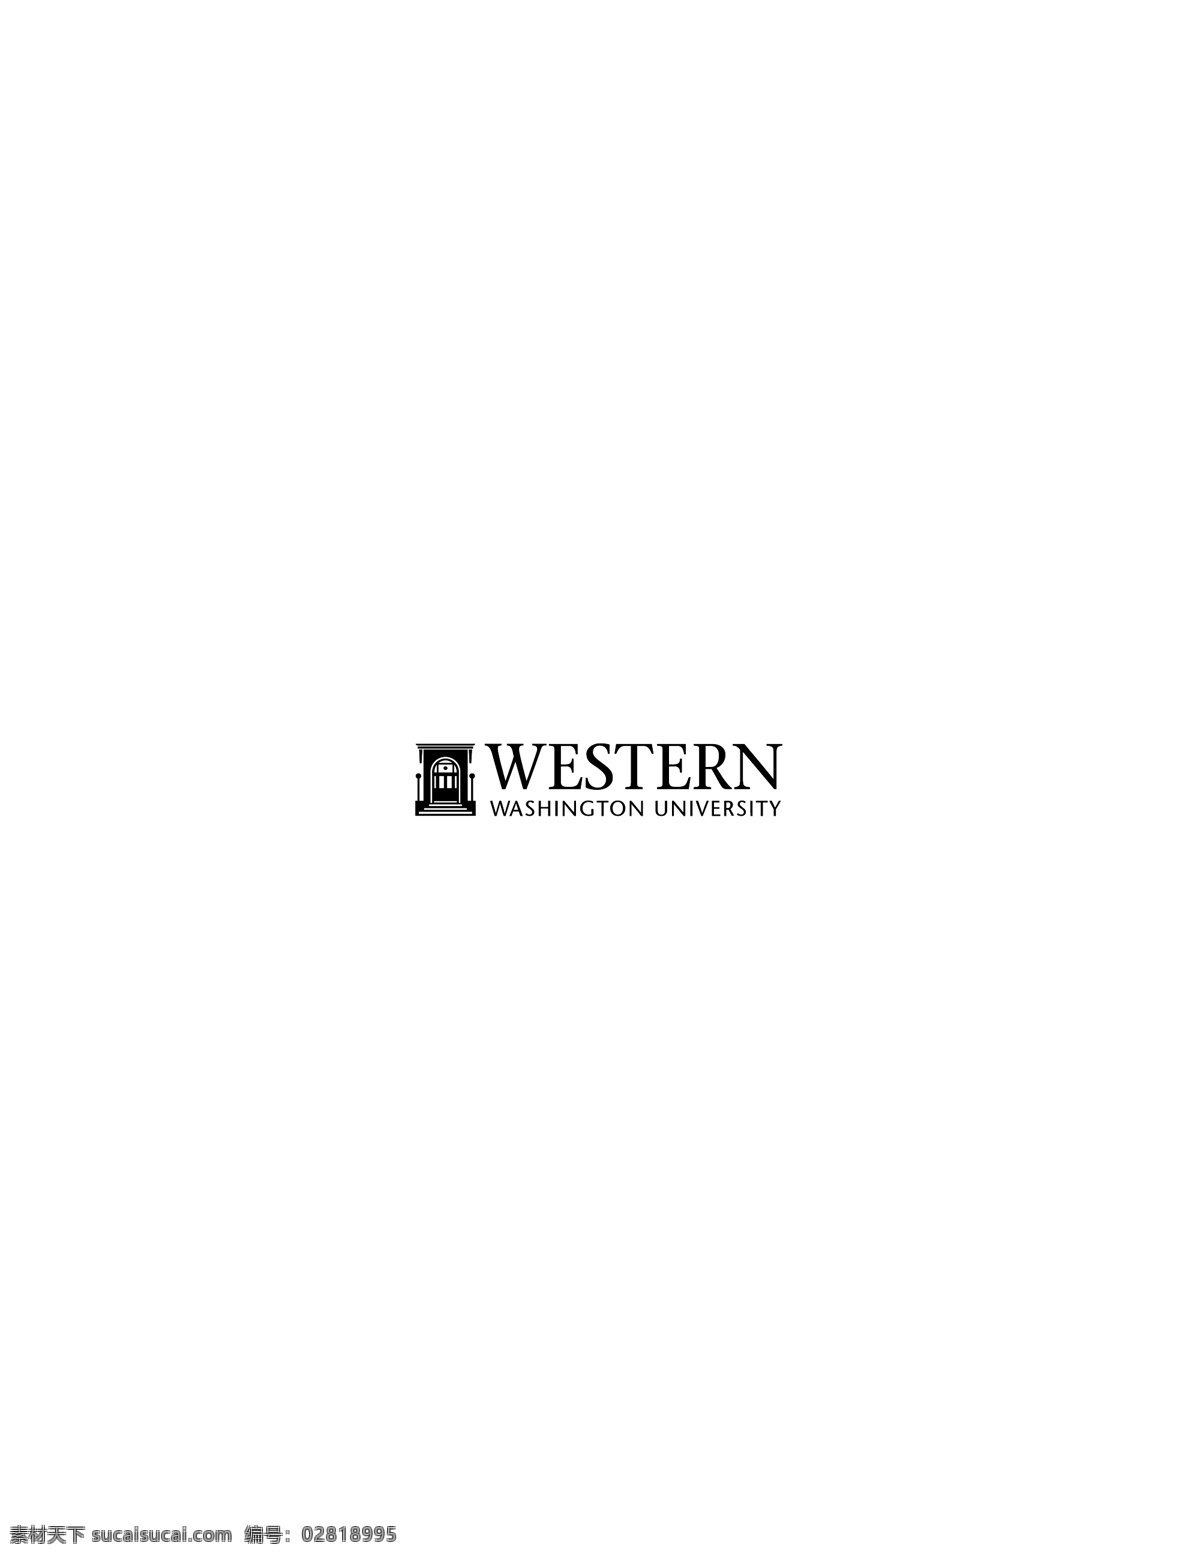 logo大全 logo 设计欣赏 商业矢量 矢量下载 westernwashingtonuniversity2 知名 学校 标志设计 欣赏 网页矢量 矢量图 其他矢量图